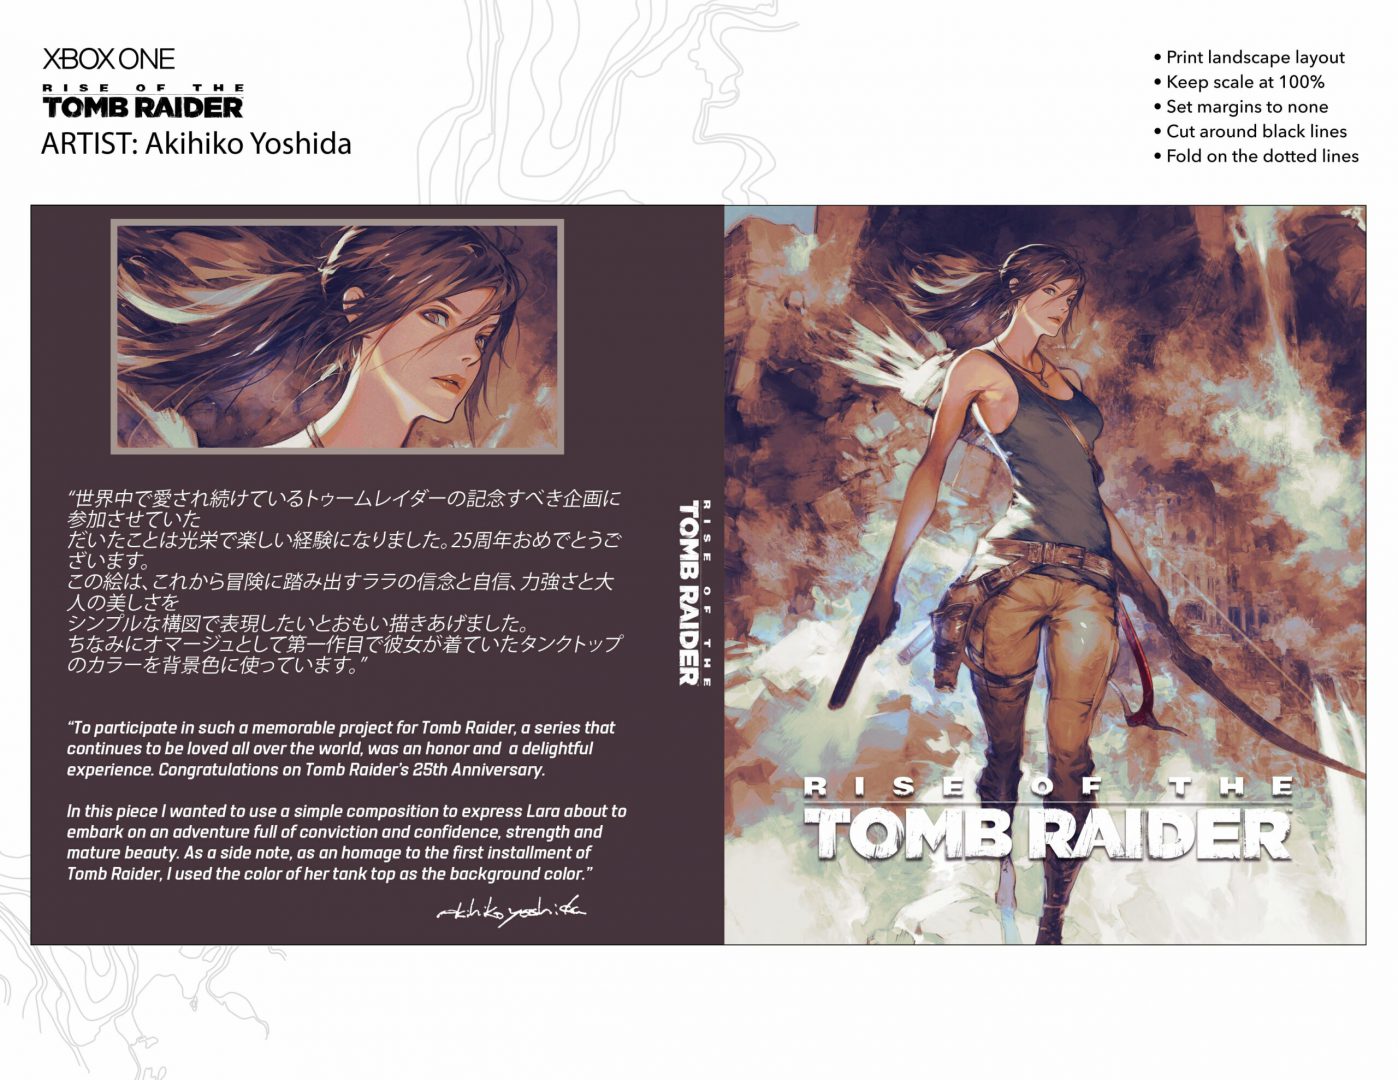 Descarga gratis este increíble arte de Tomb Raider hecho por Akihiko Yoshida - El artista Akihiko Yoshida nos trae este espectacular box art de Rise of the Tomb Raider.